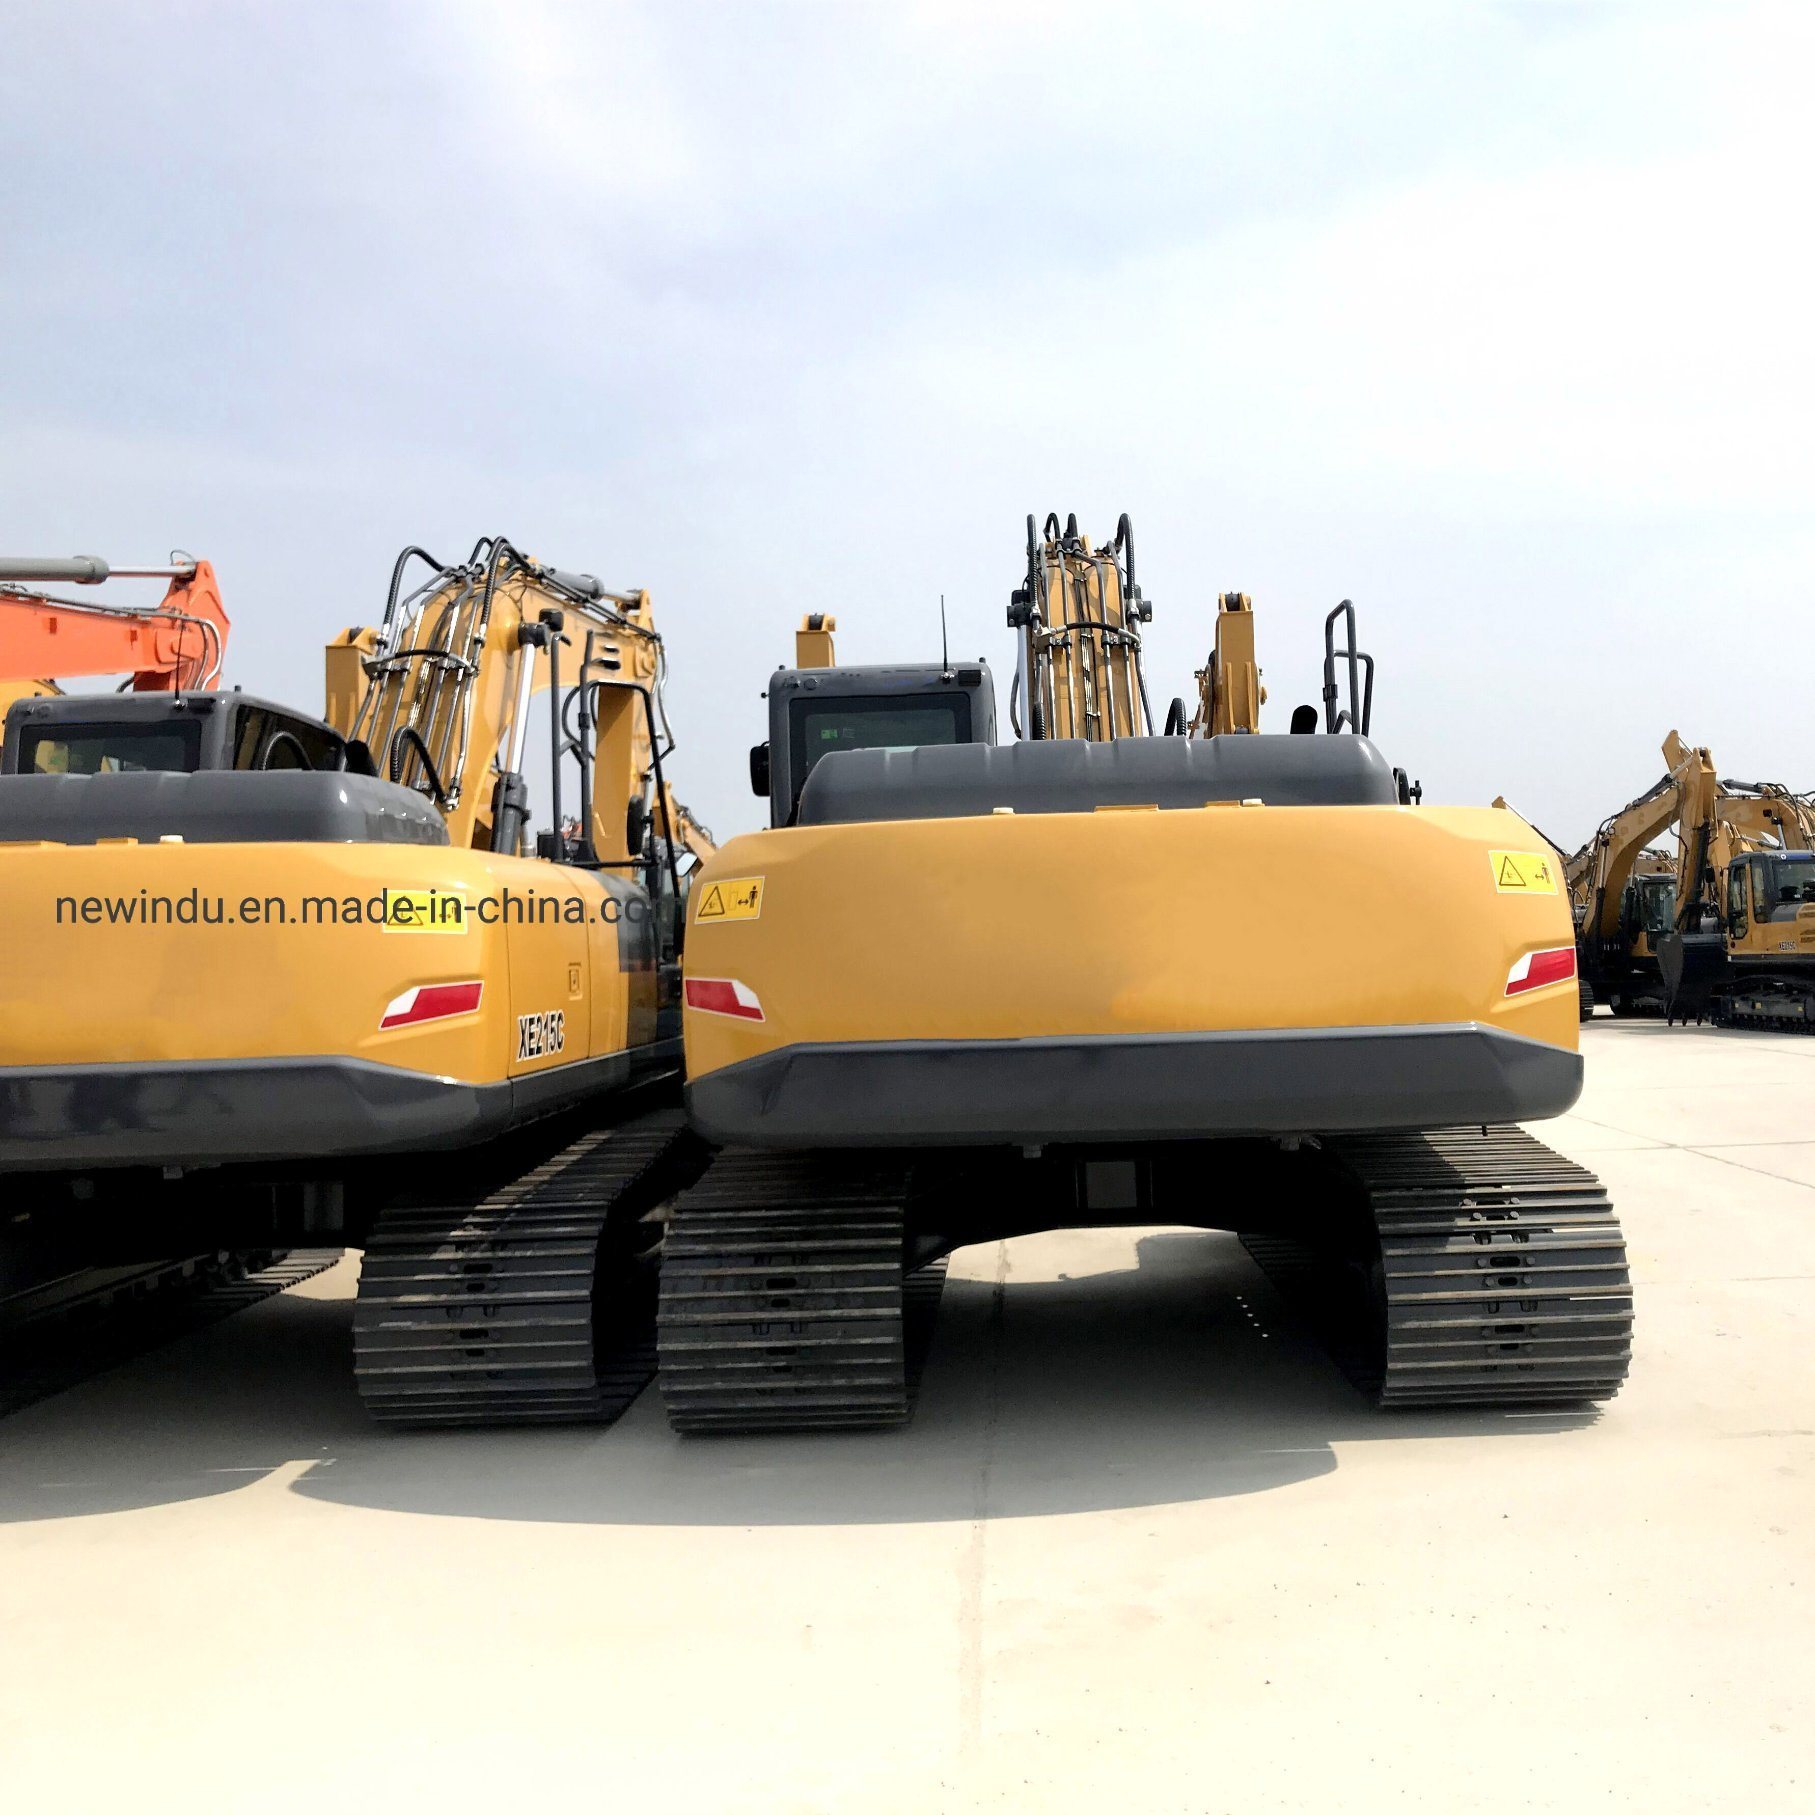 New China Brand Hydraulic Crawler Excavator Se130